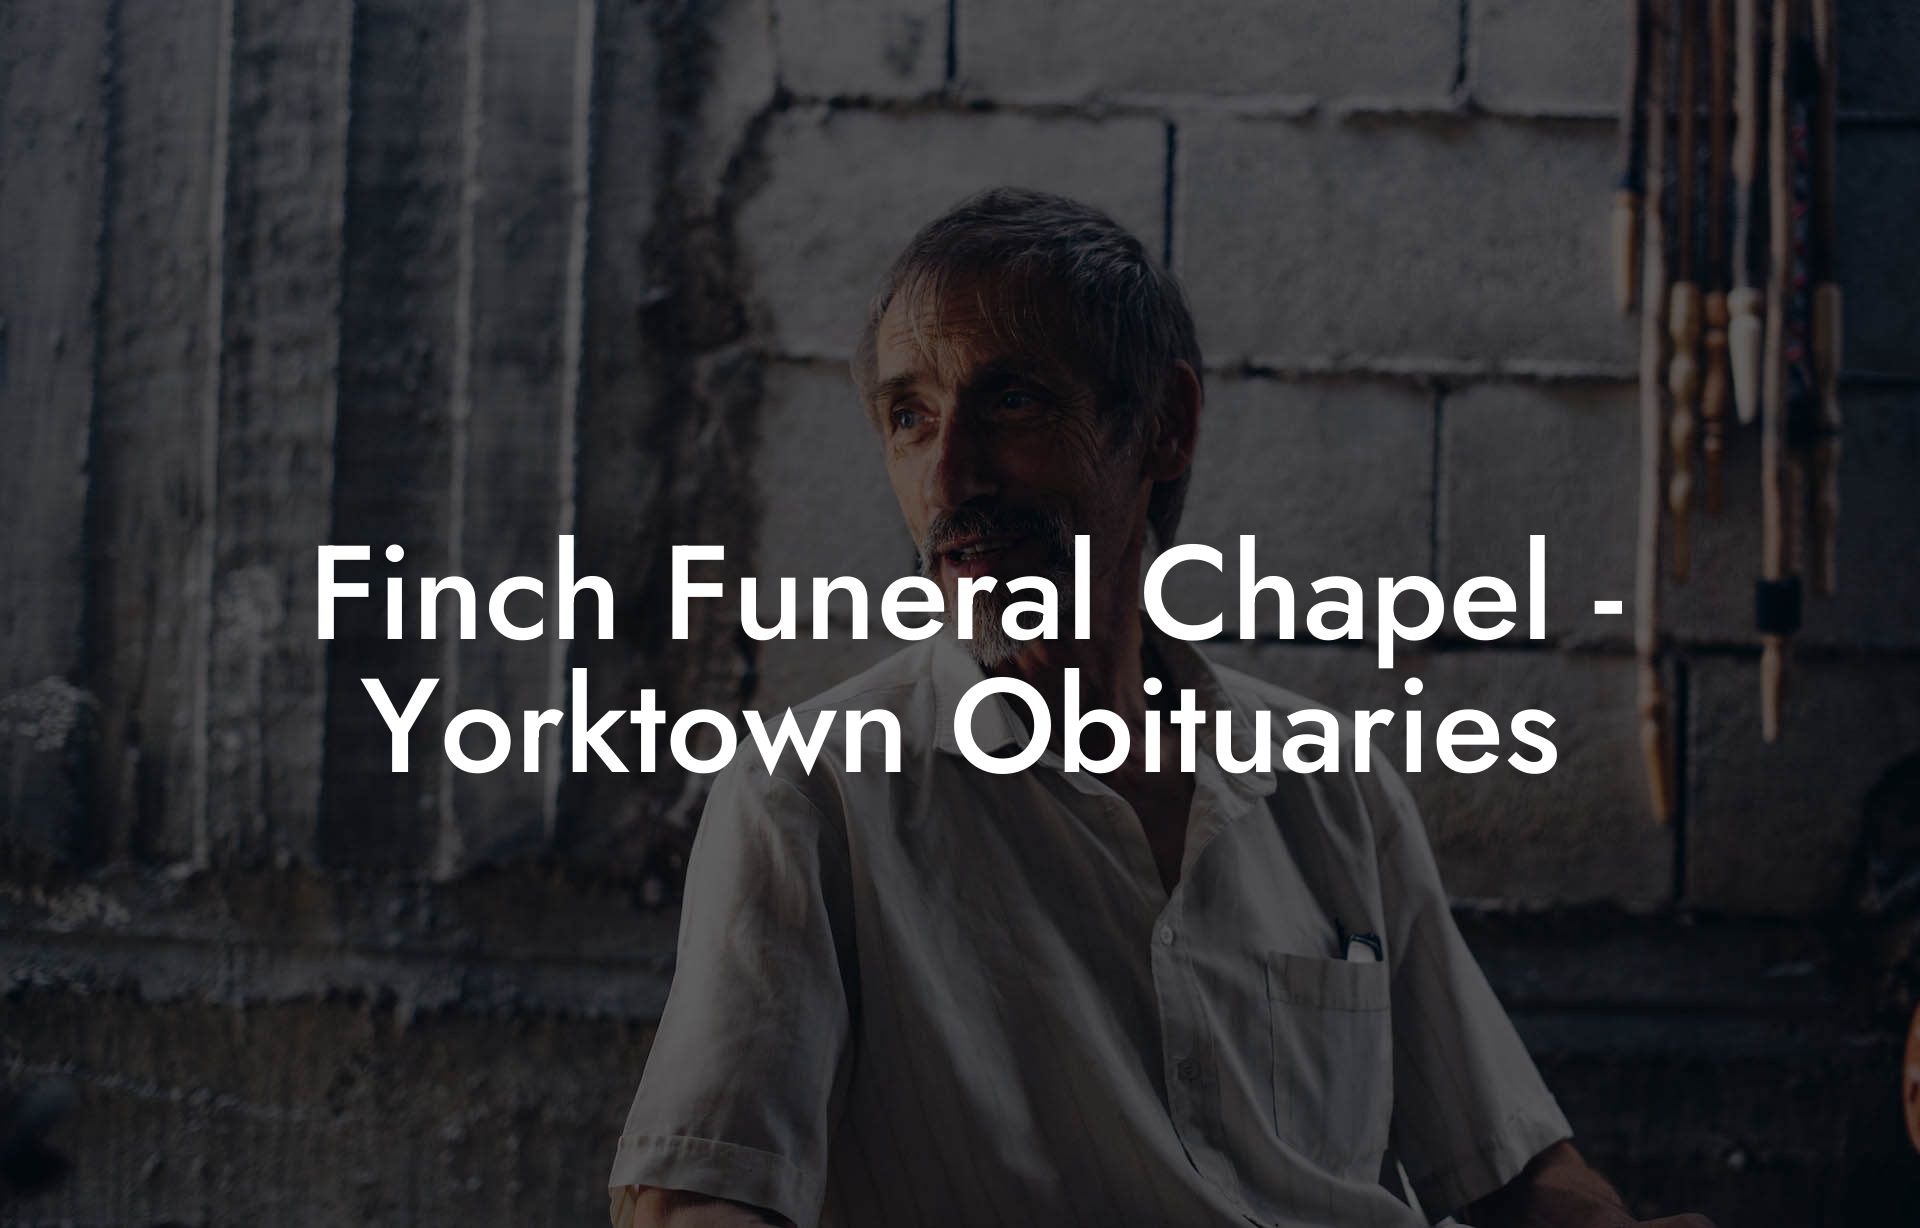 Finch Funeral Chapel - Yorktown Obituaries